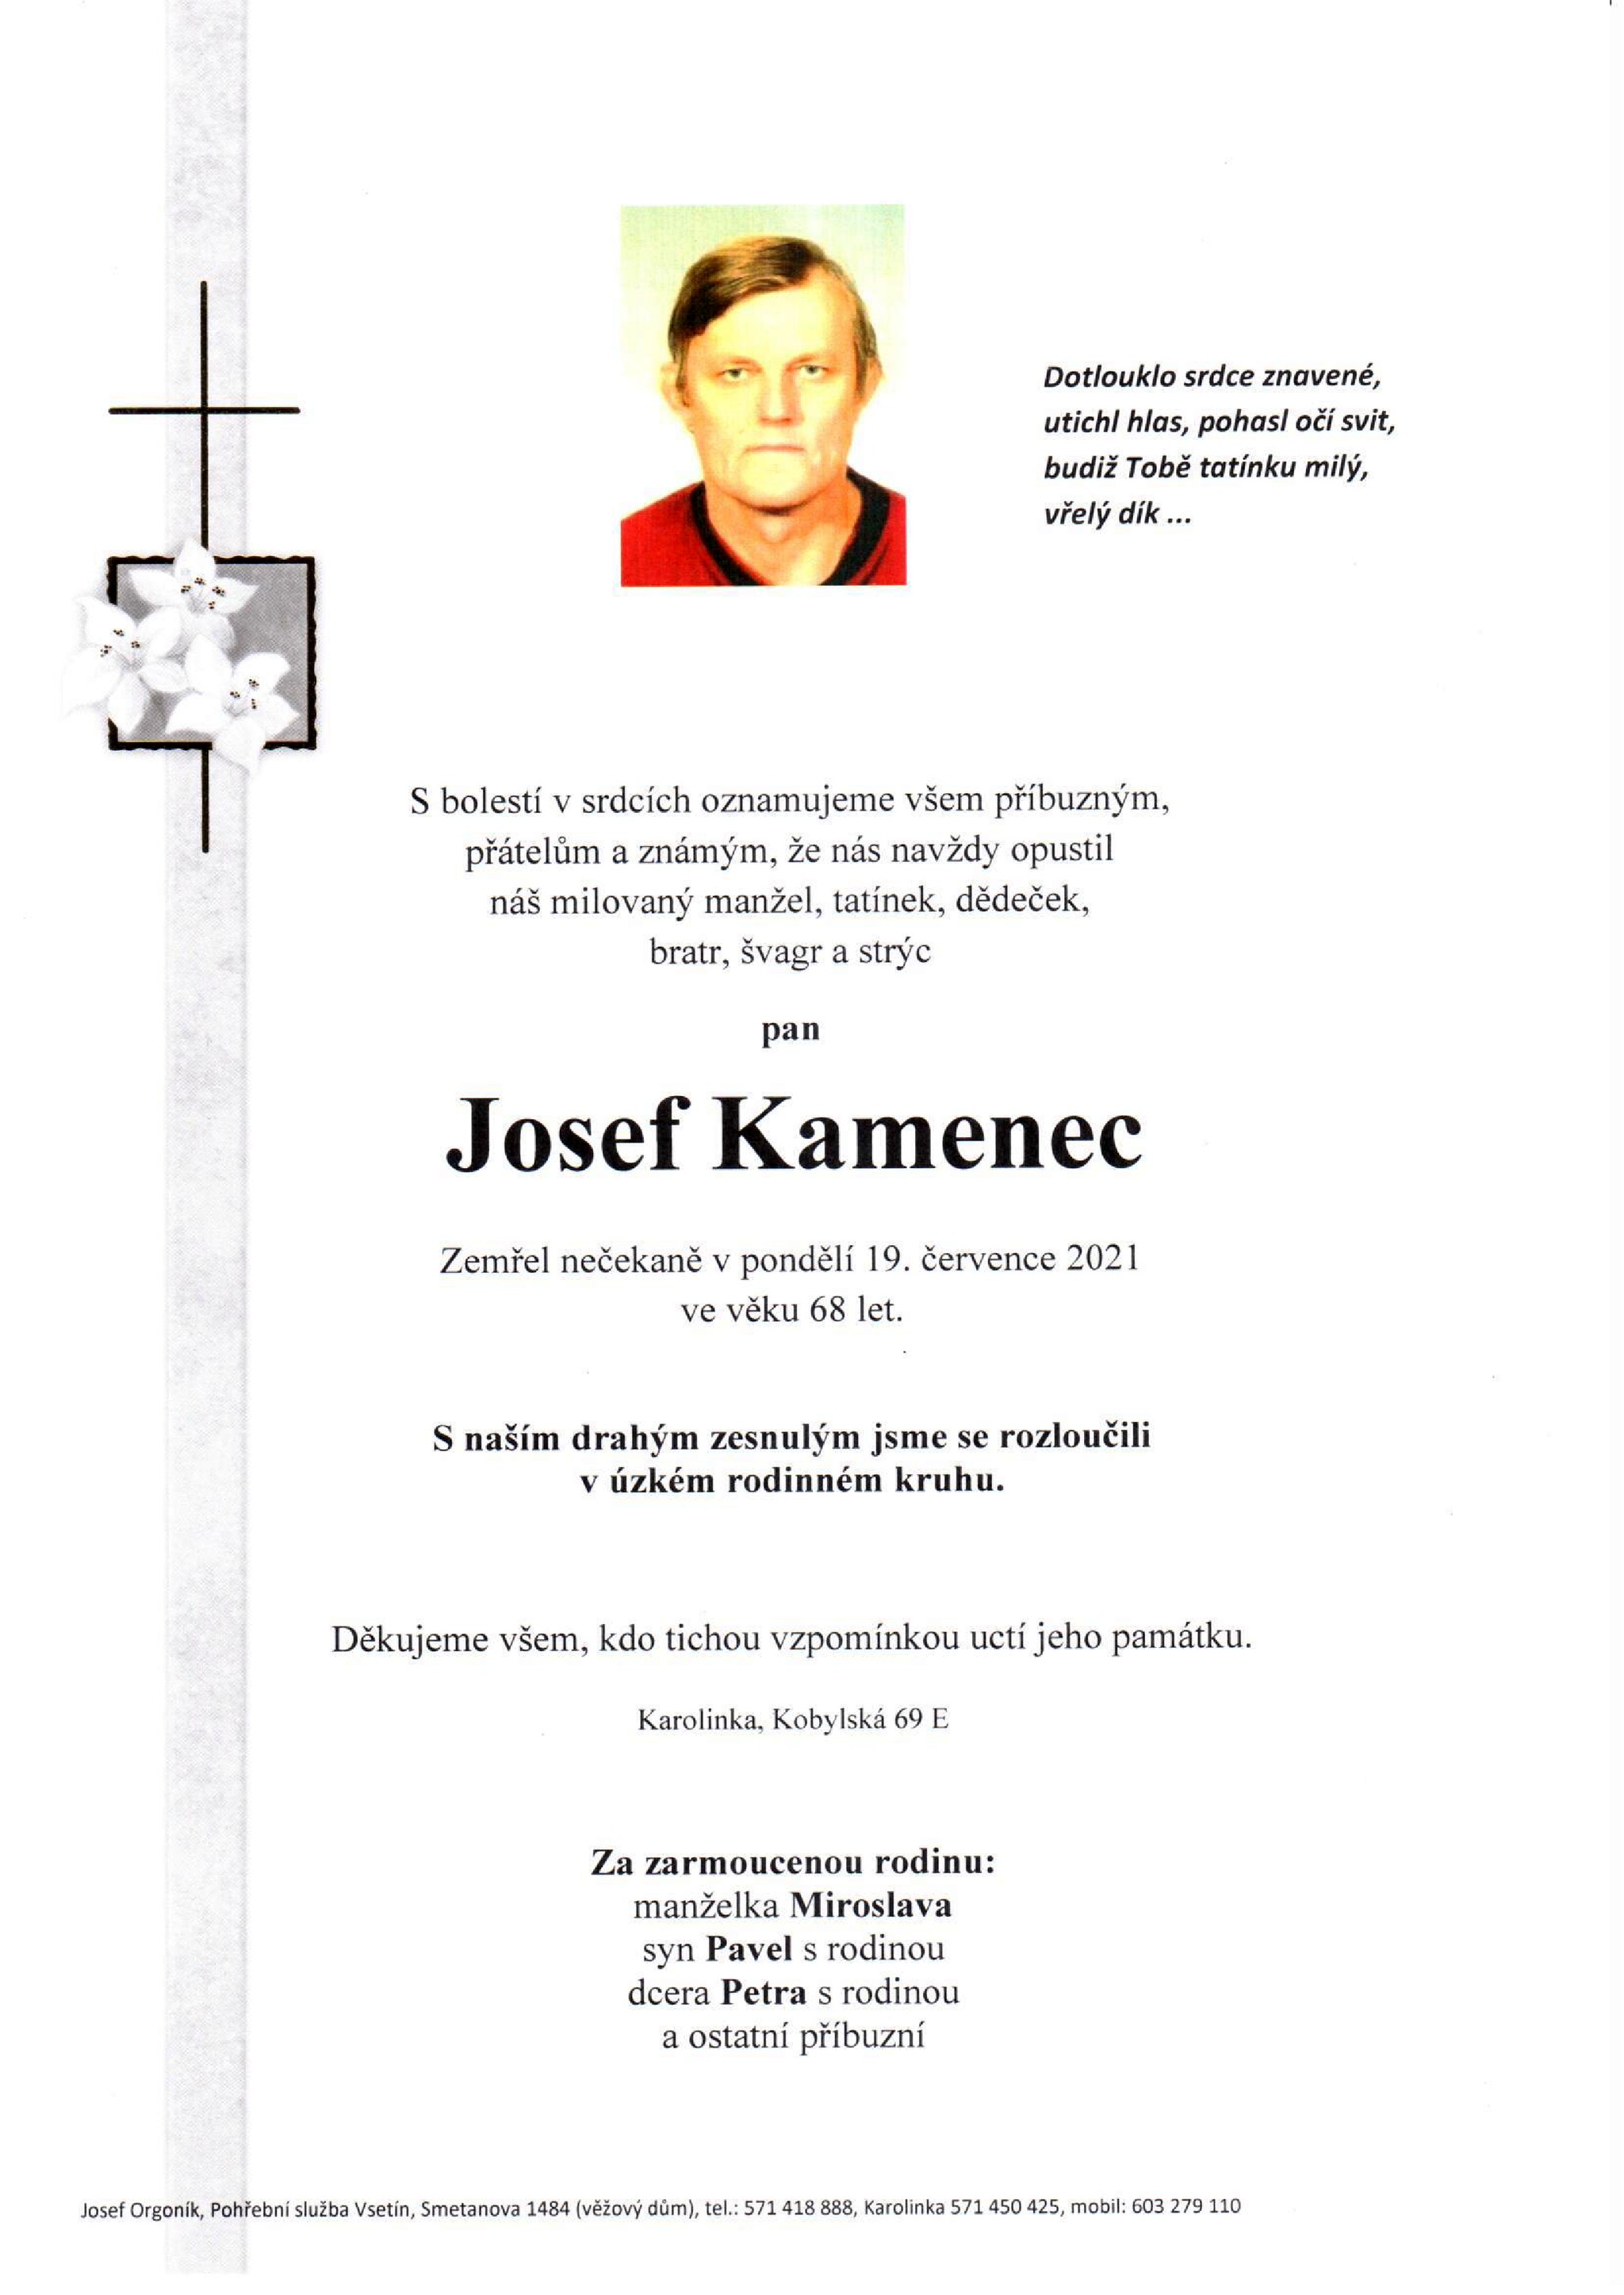 Josef Kamenec